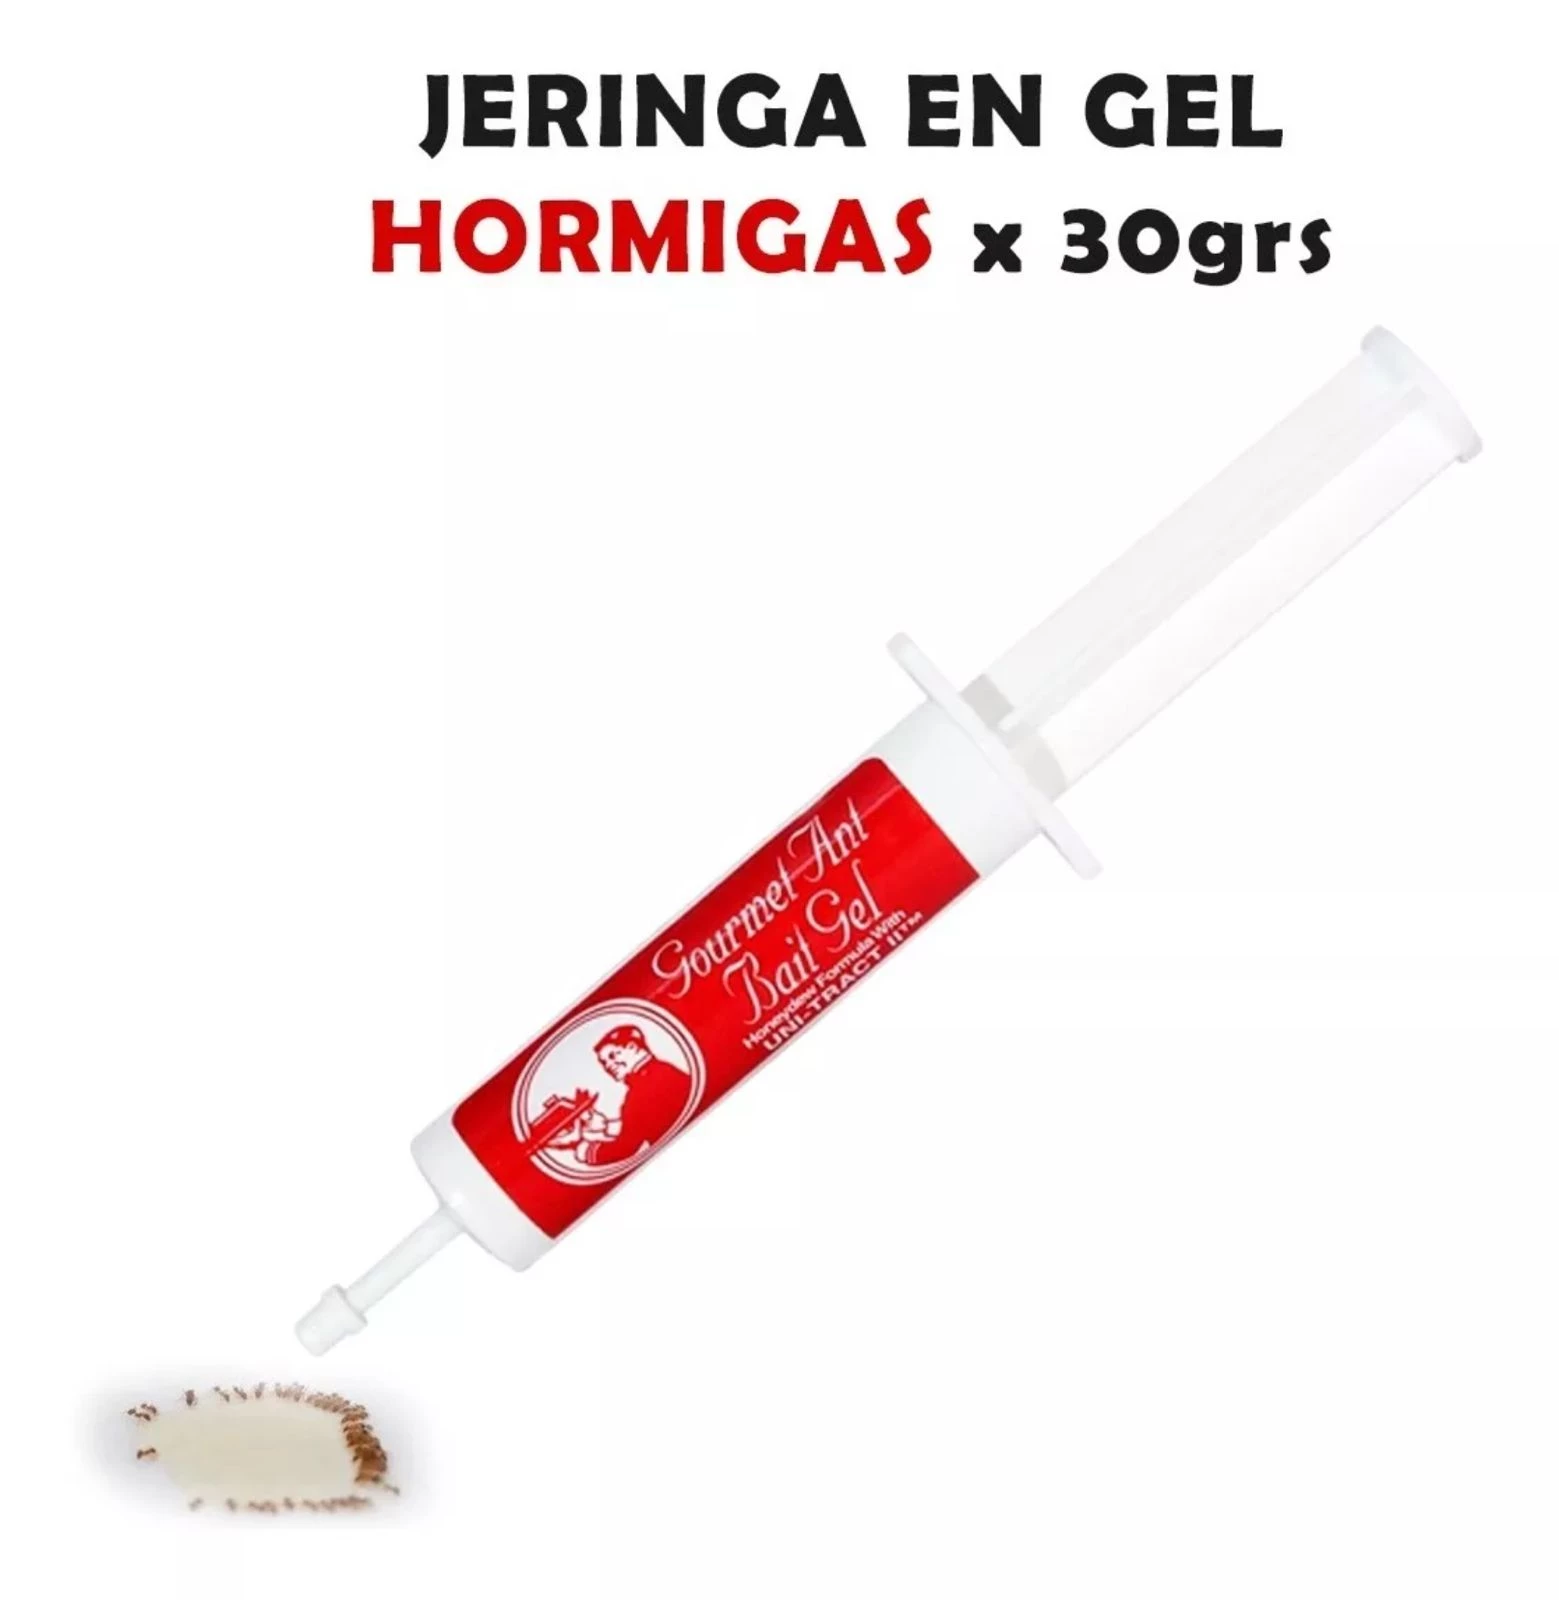 Jeringa Insecticida Gel Para Fumigar Hormigas Veneno Mata x30 gramos